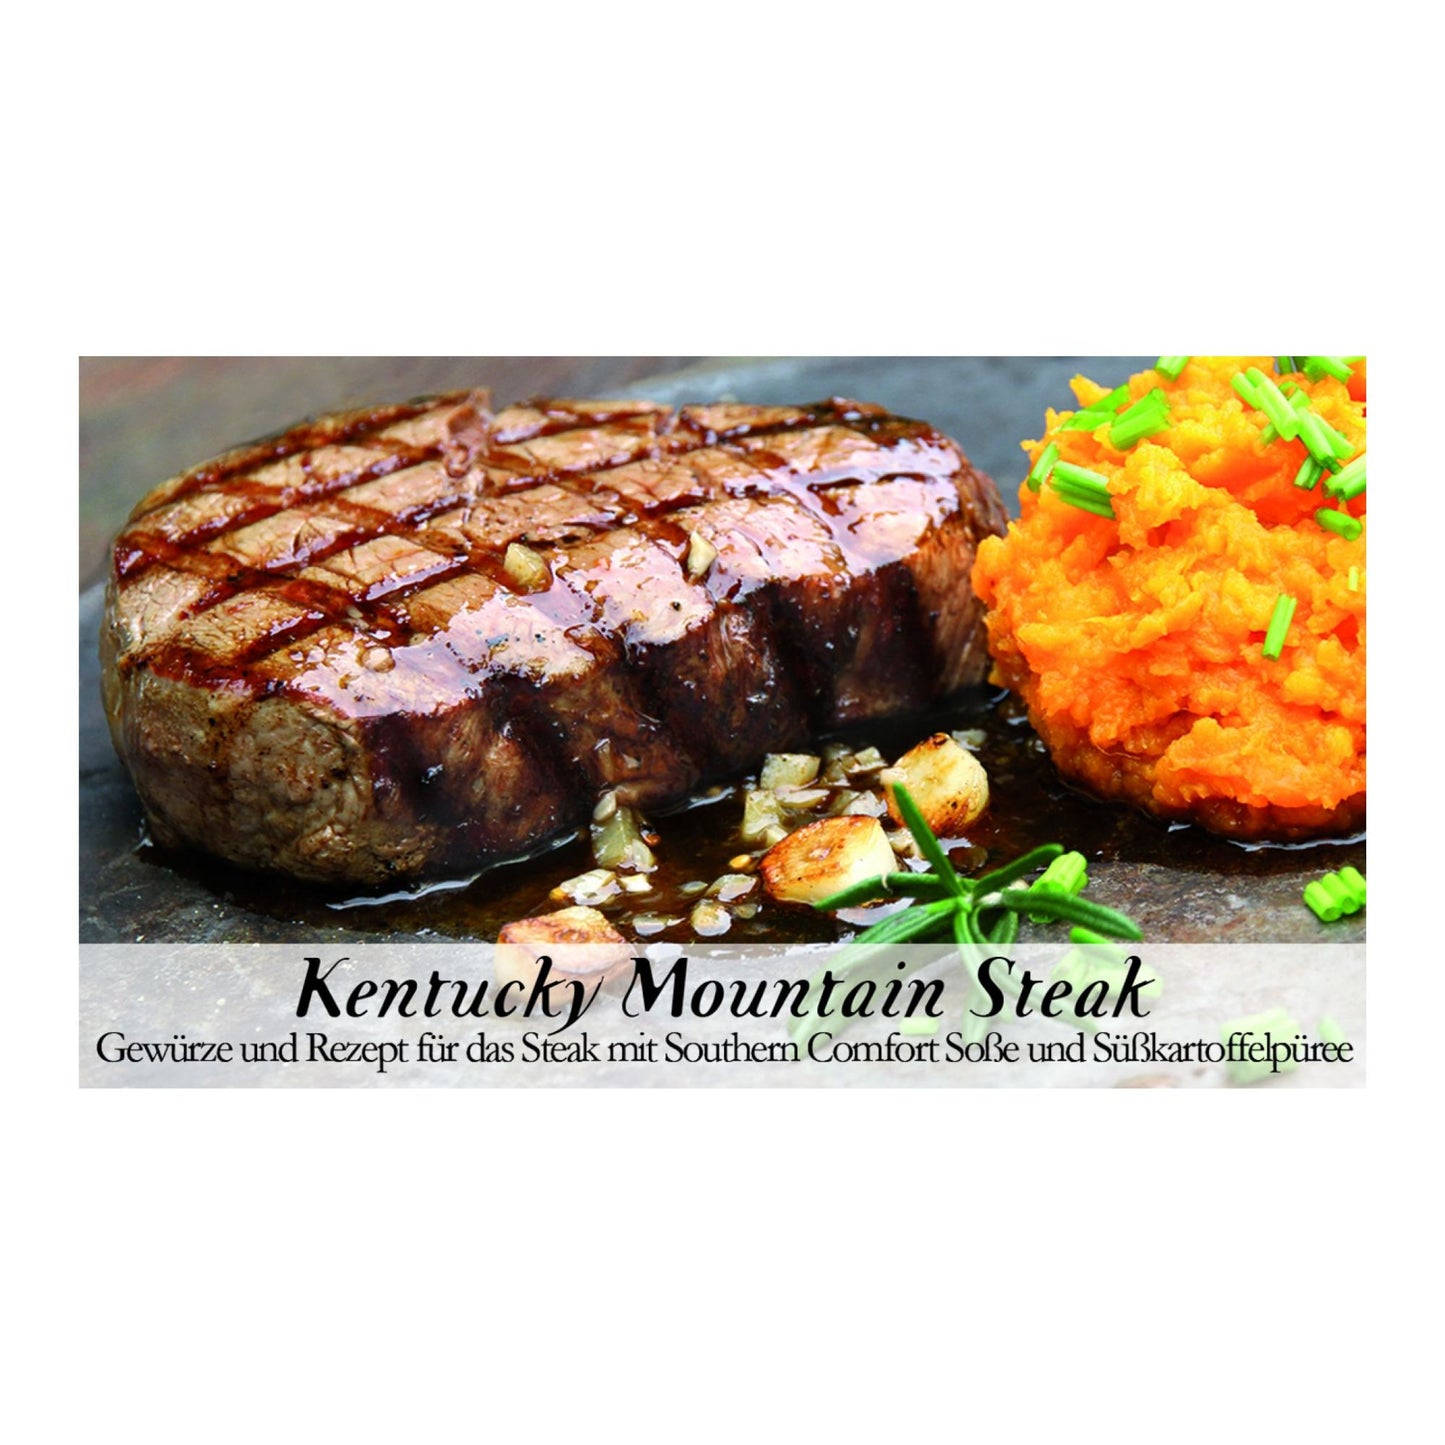 Kentucky Mountain Steak-Gewürzkasten